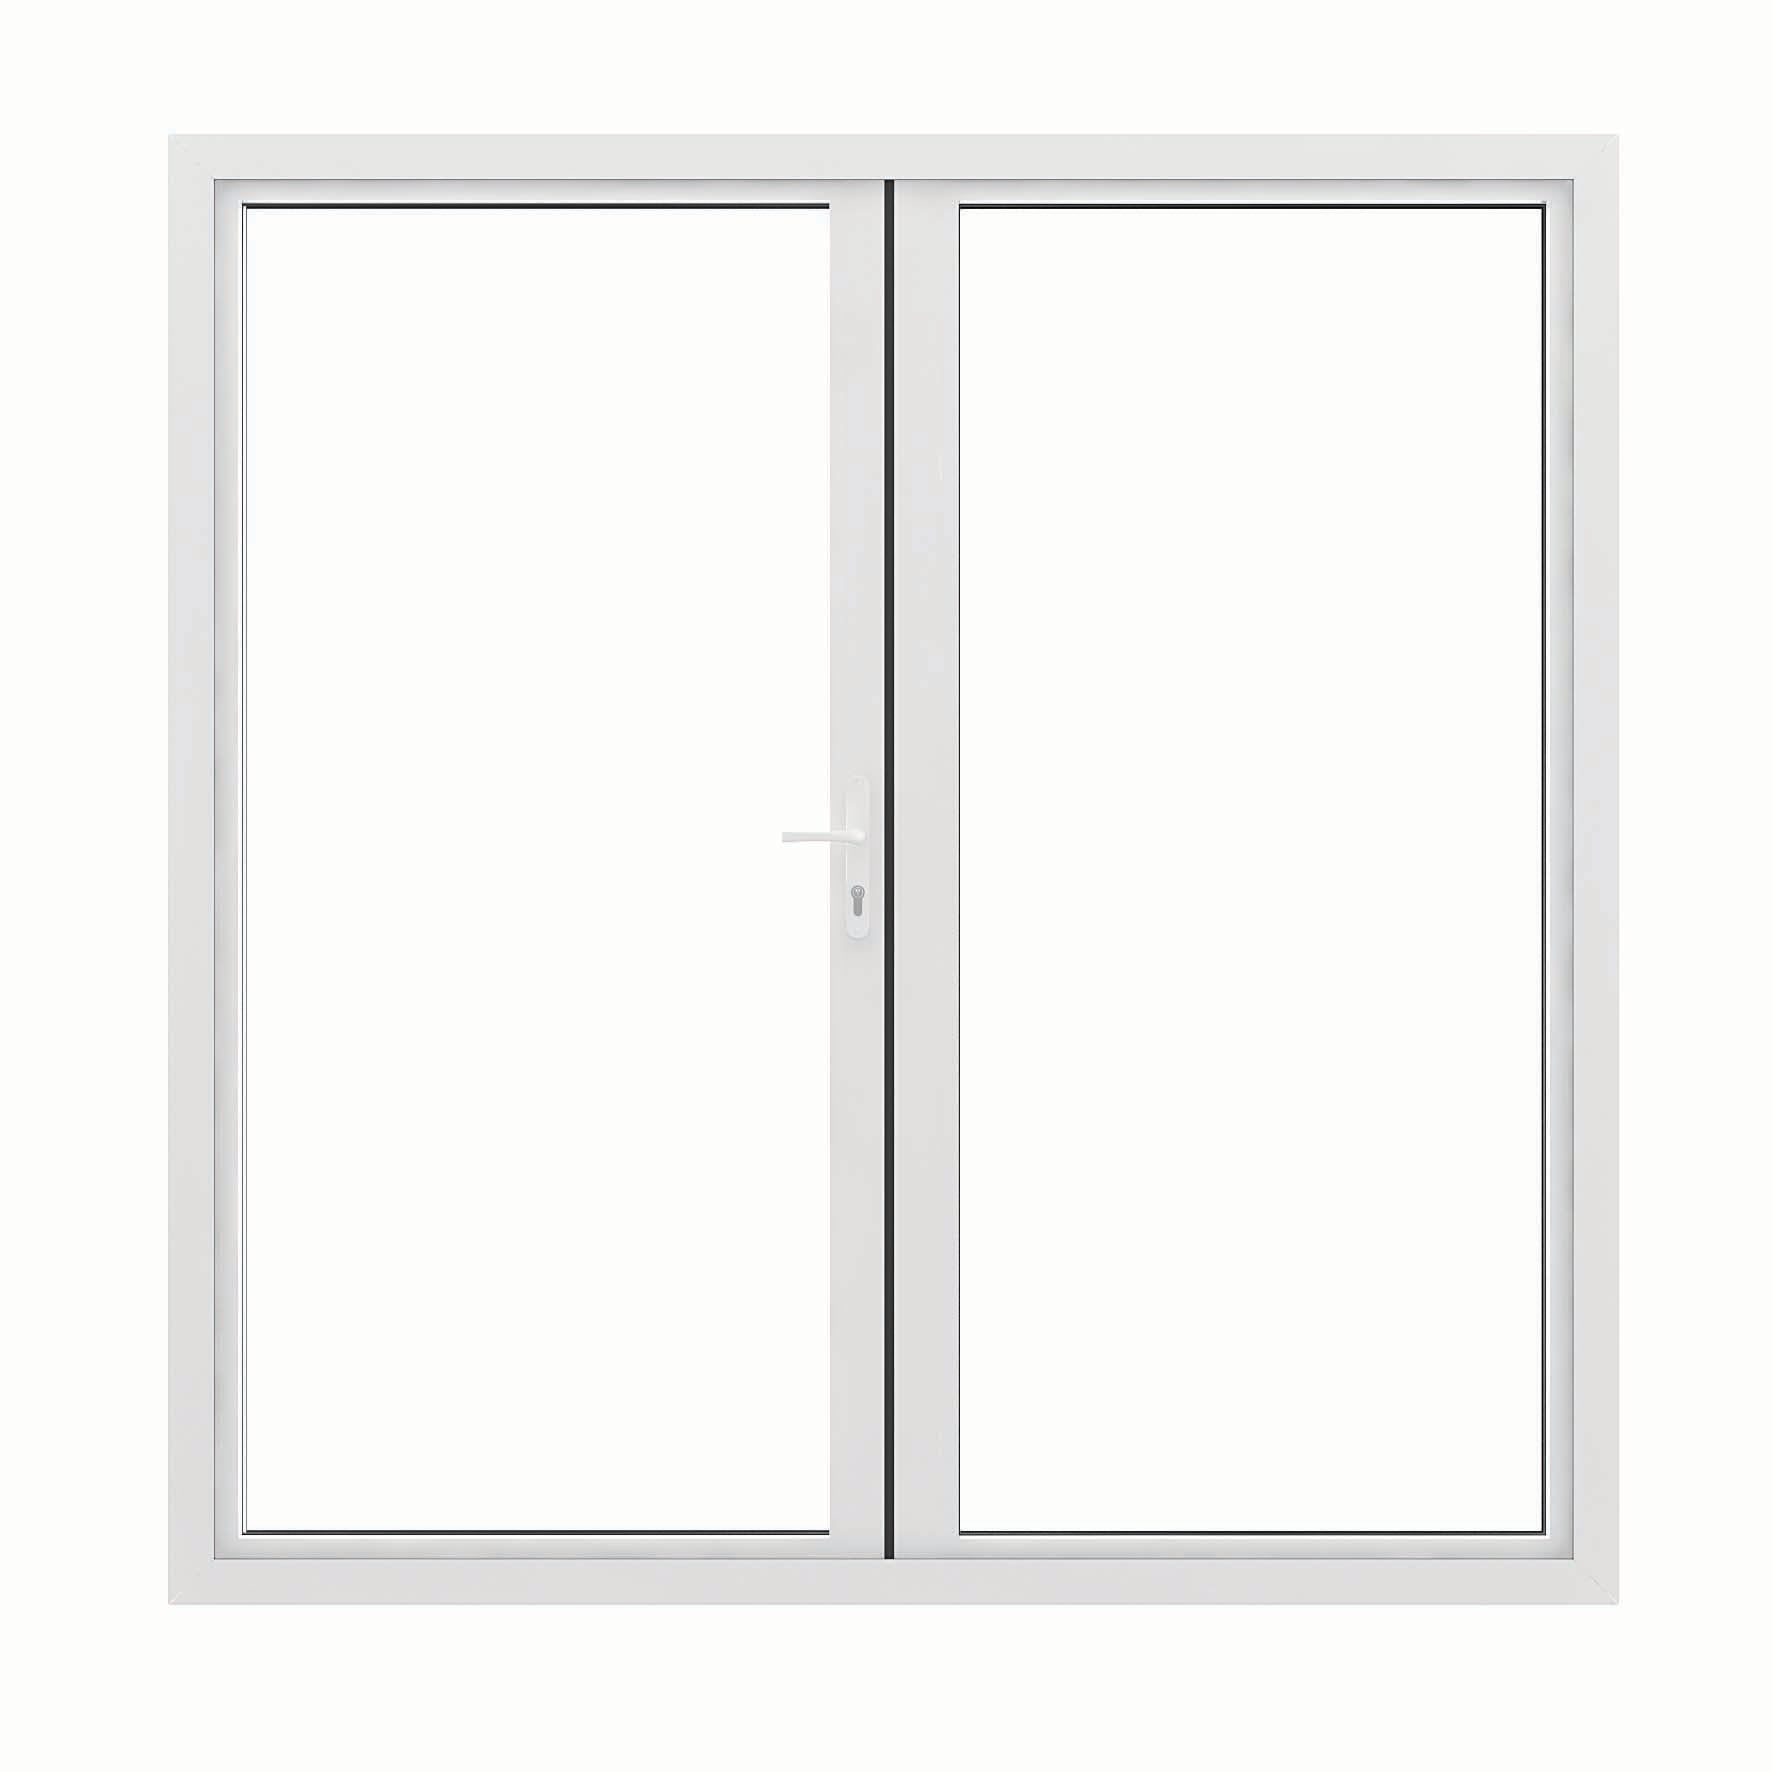 Jci Aluminium French Door White Outwards Opening